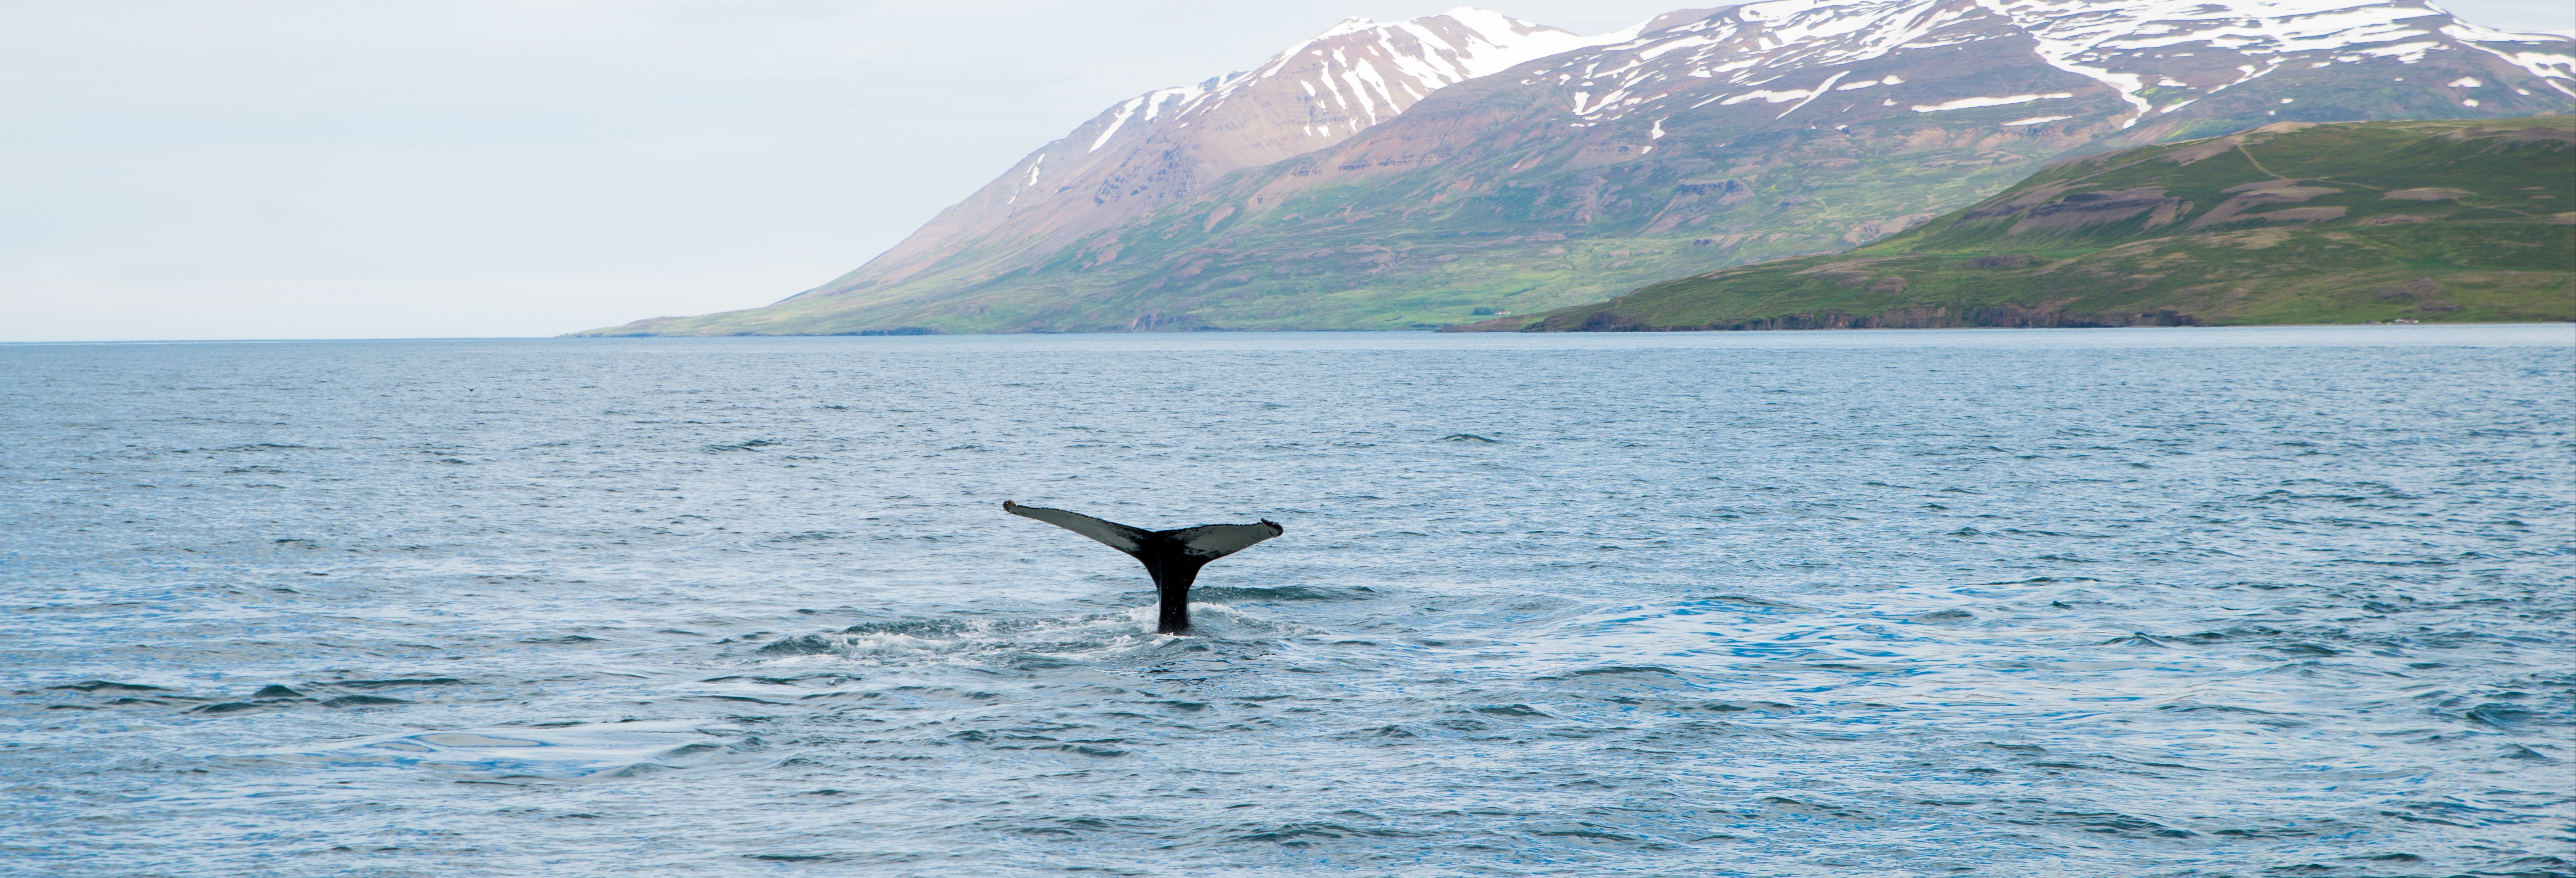 Tour de 8 días por Islandia con avistamiento de ballenas